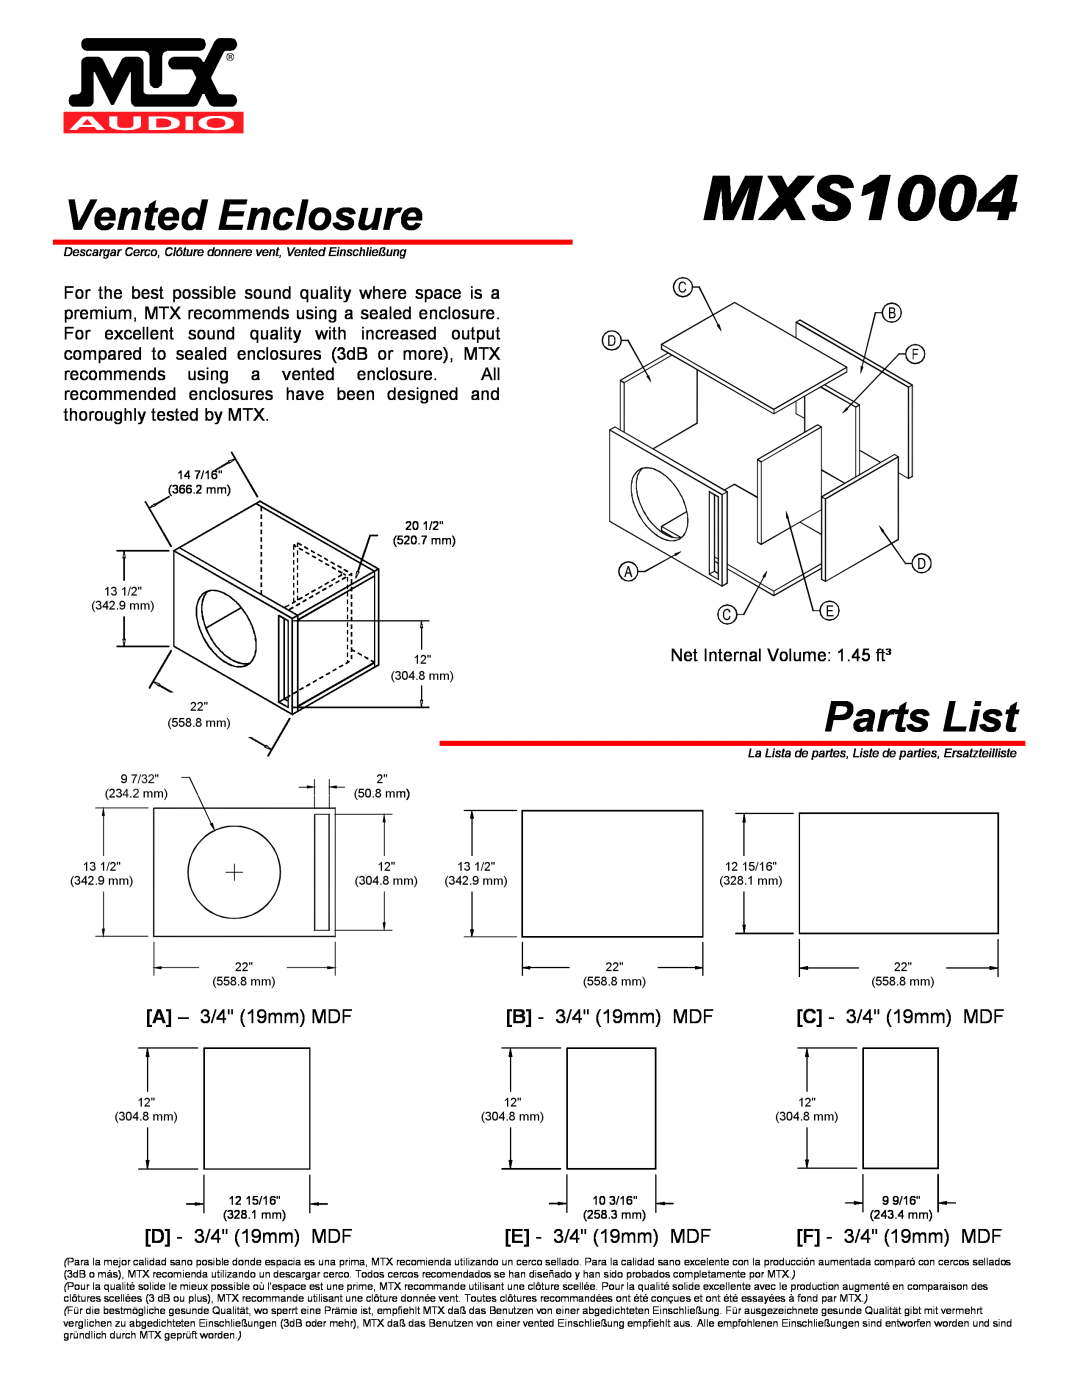 MTX Audio MXS1004 Vented Enclosure, E - 3/4 19mm MDF, F - 3/4 19mm MDF, Parts List, A - 3/4 19mm MDF, B - 3/4 19mm MDF 